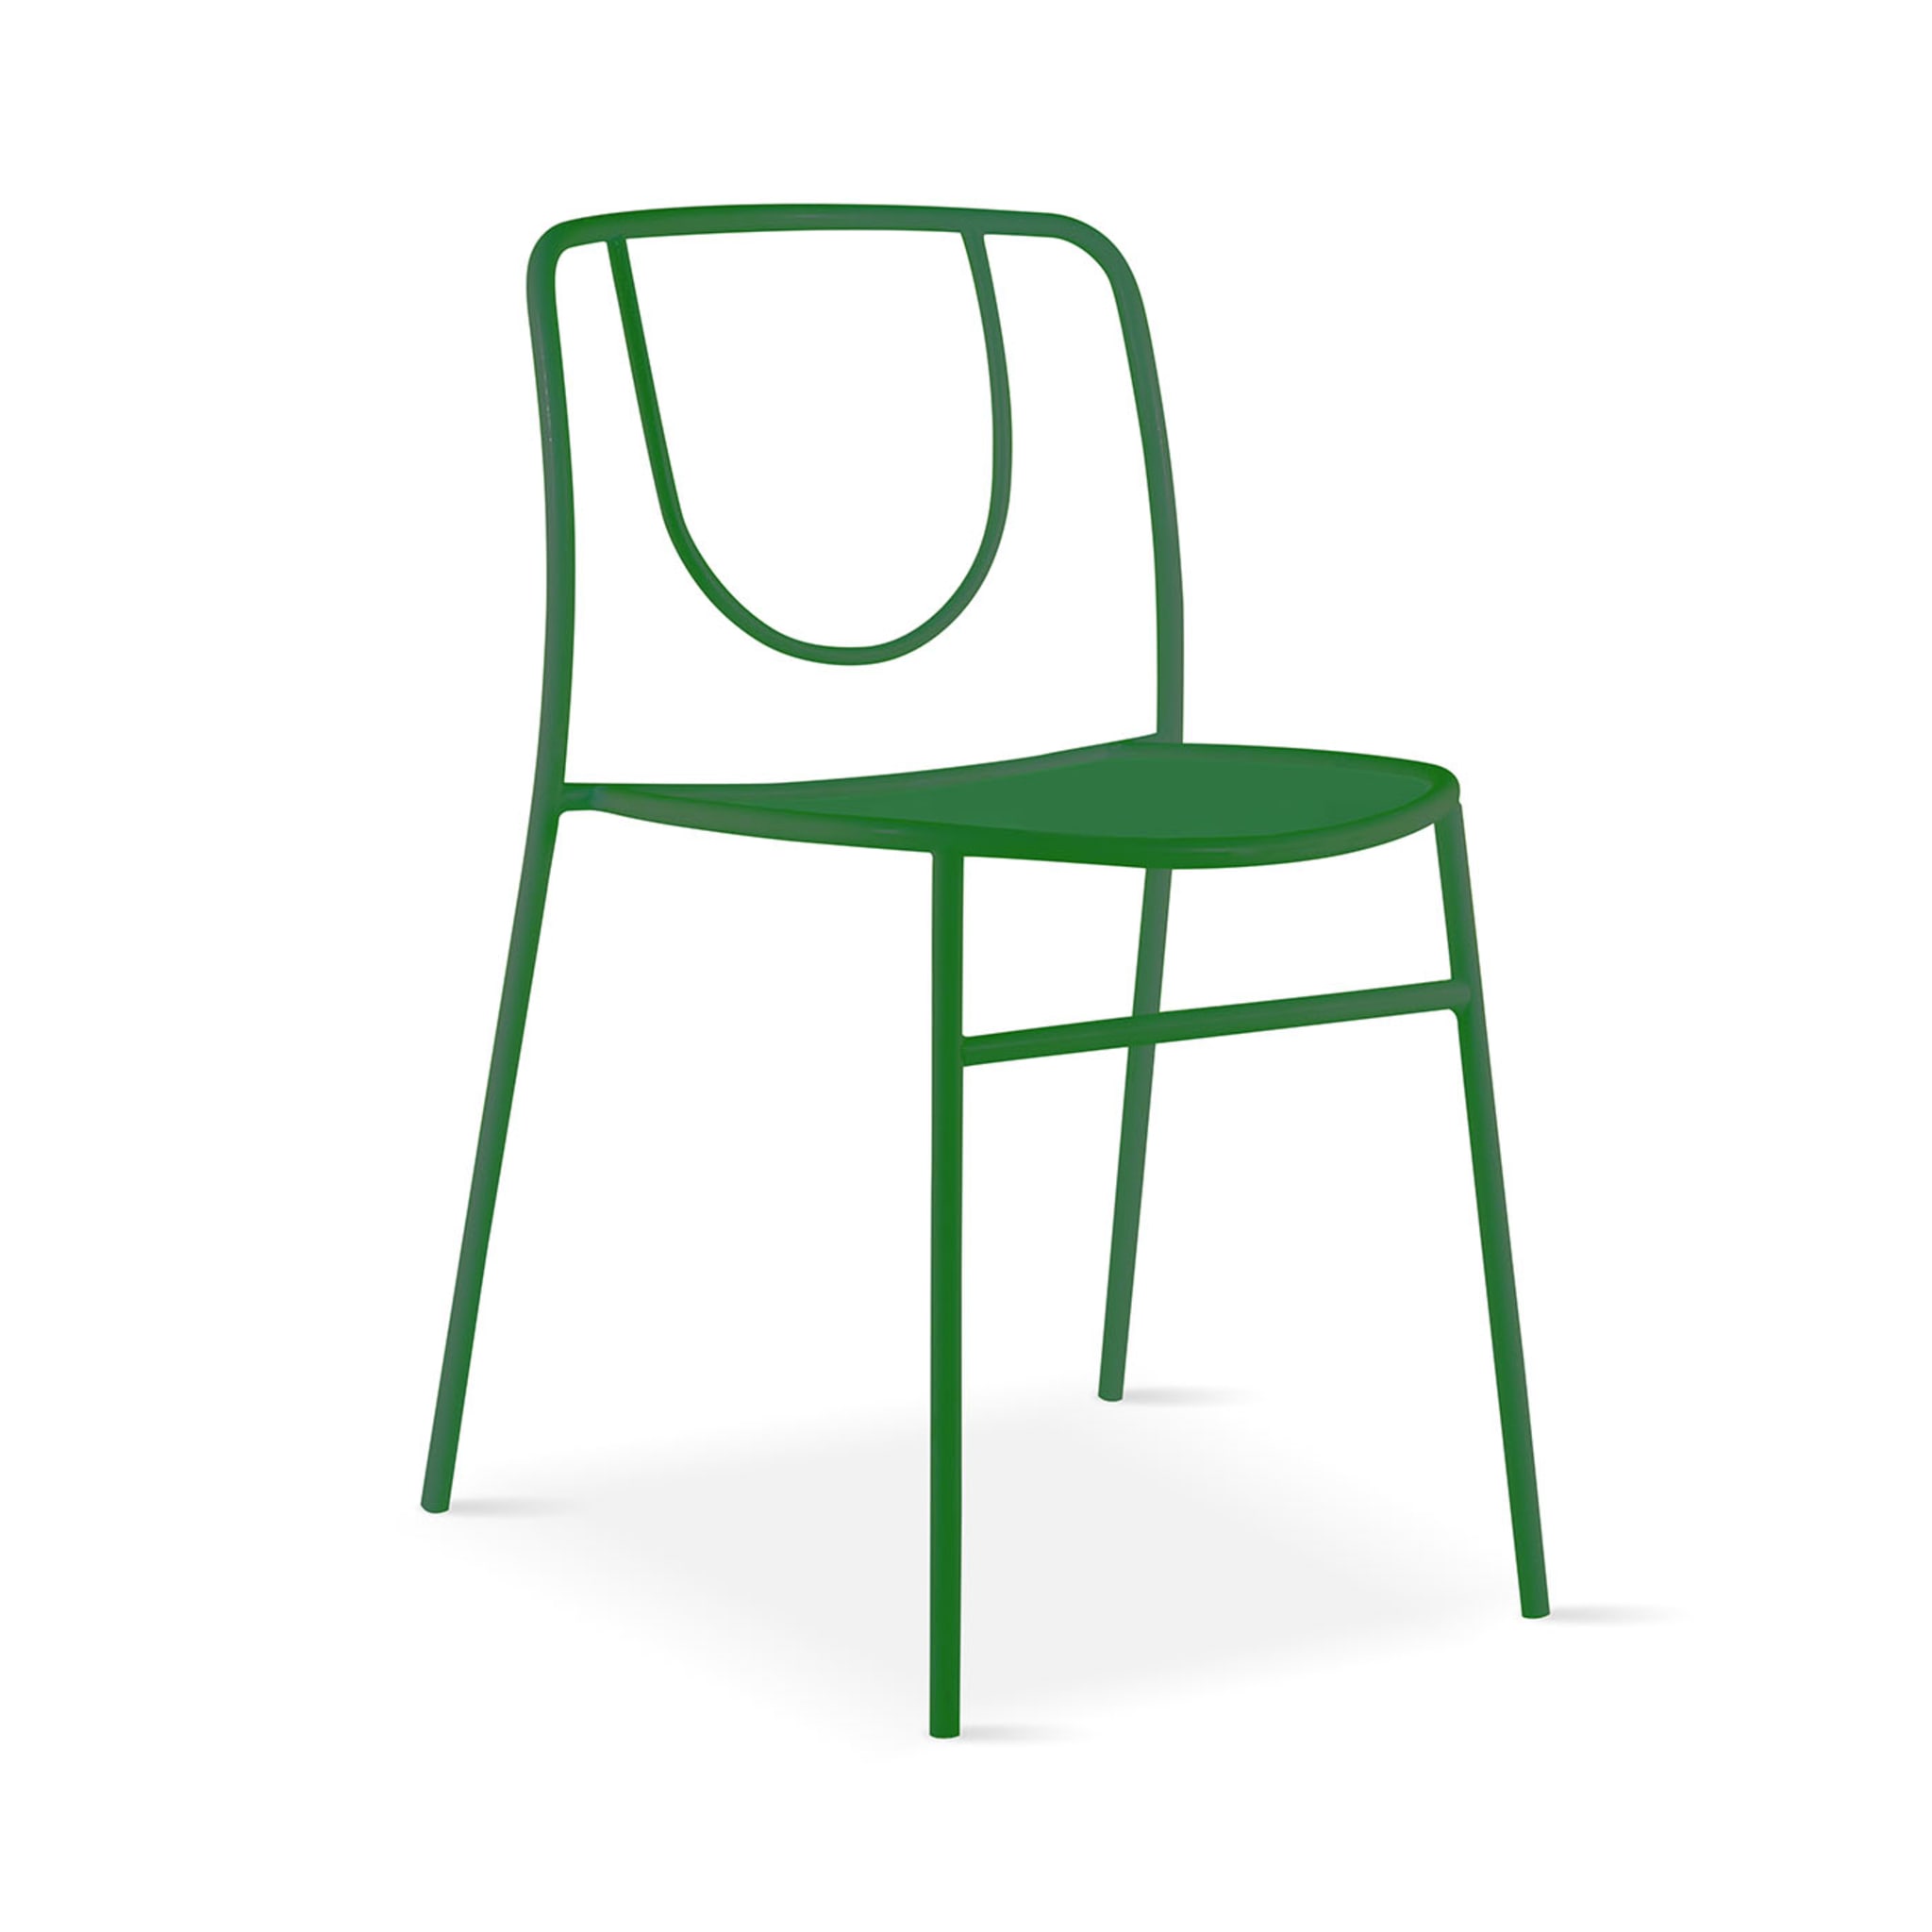 Centouno Green Chair by Atelier Nanni - Alternative view 1